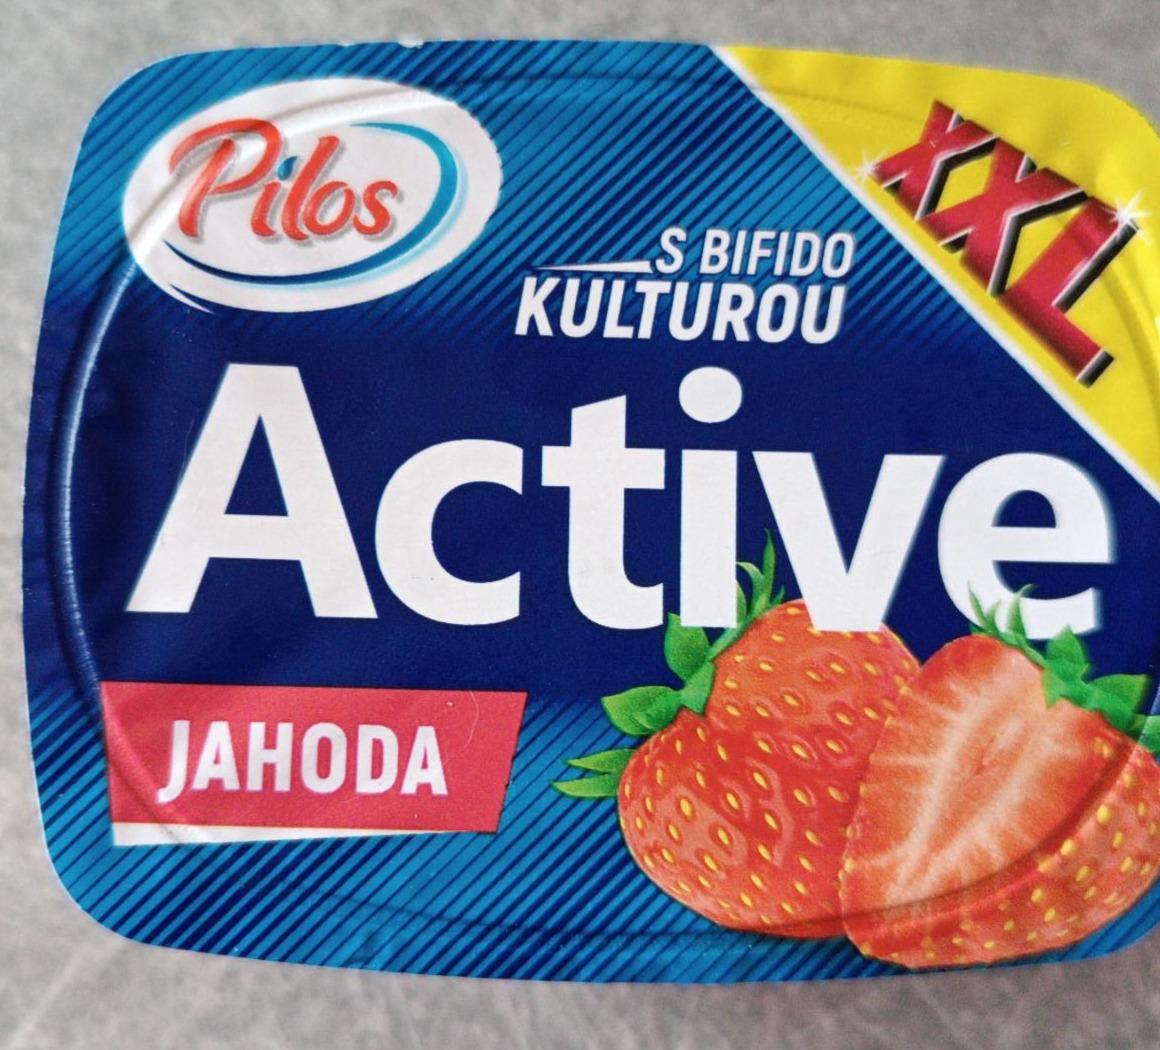 Fotografie - jogurt Active s bifidokulturou jahoda Pilos